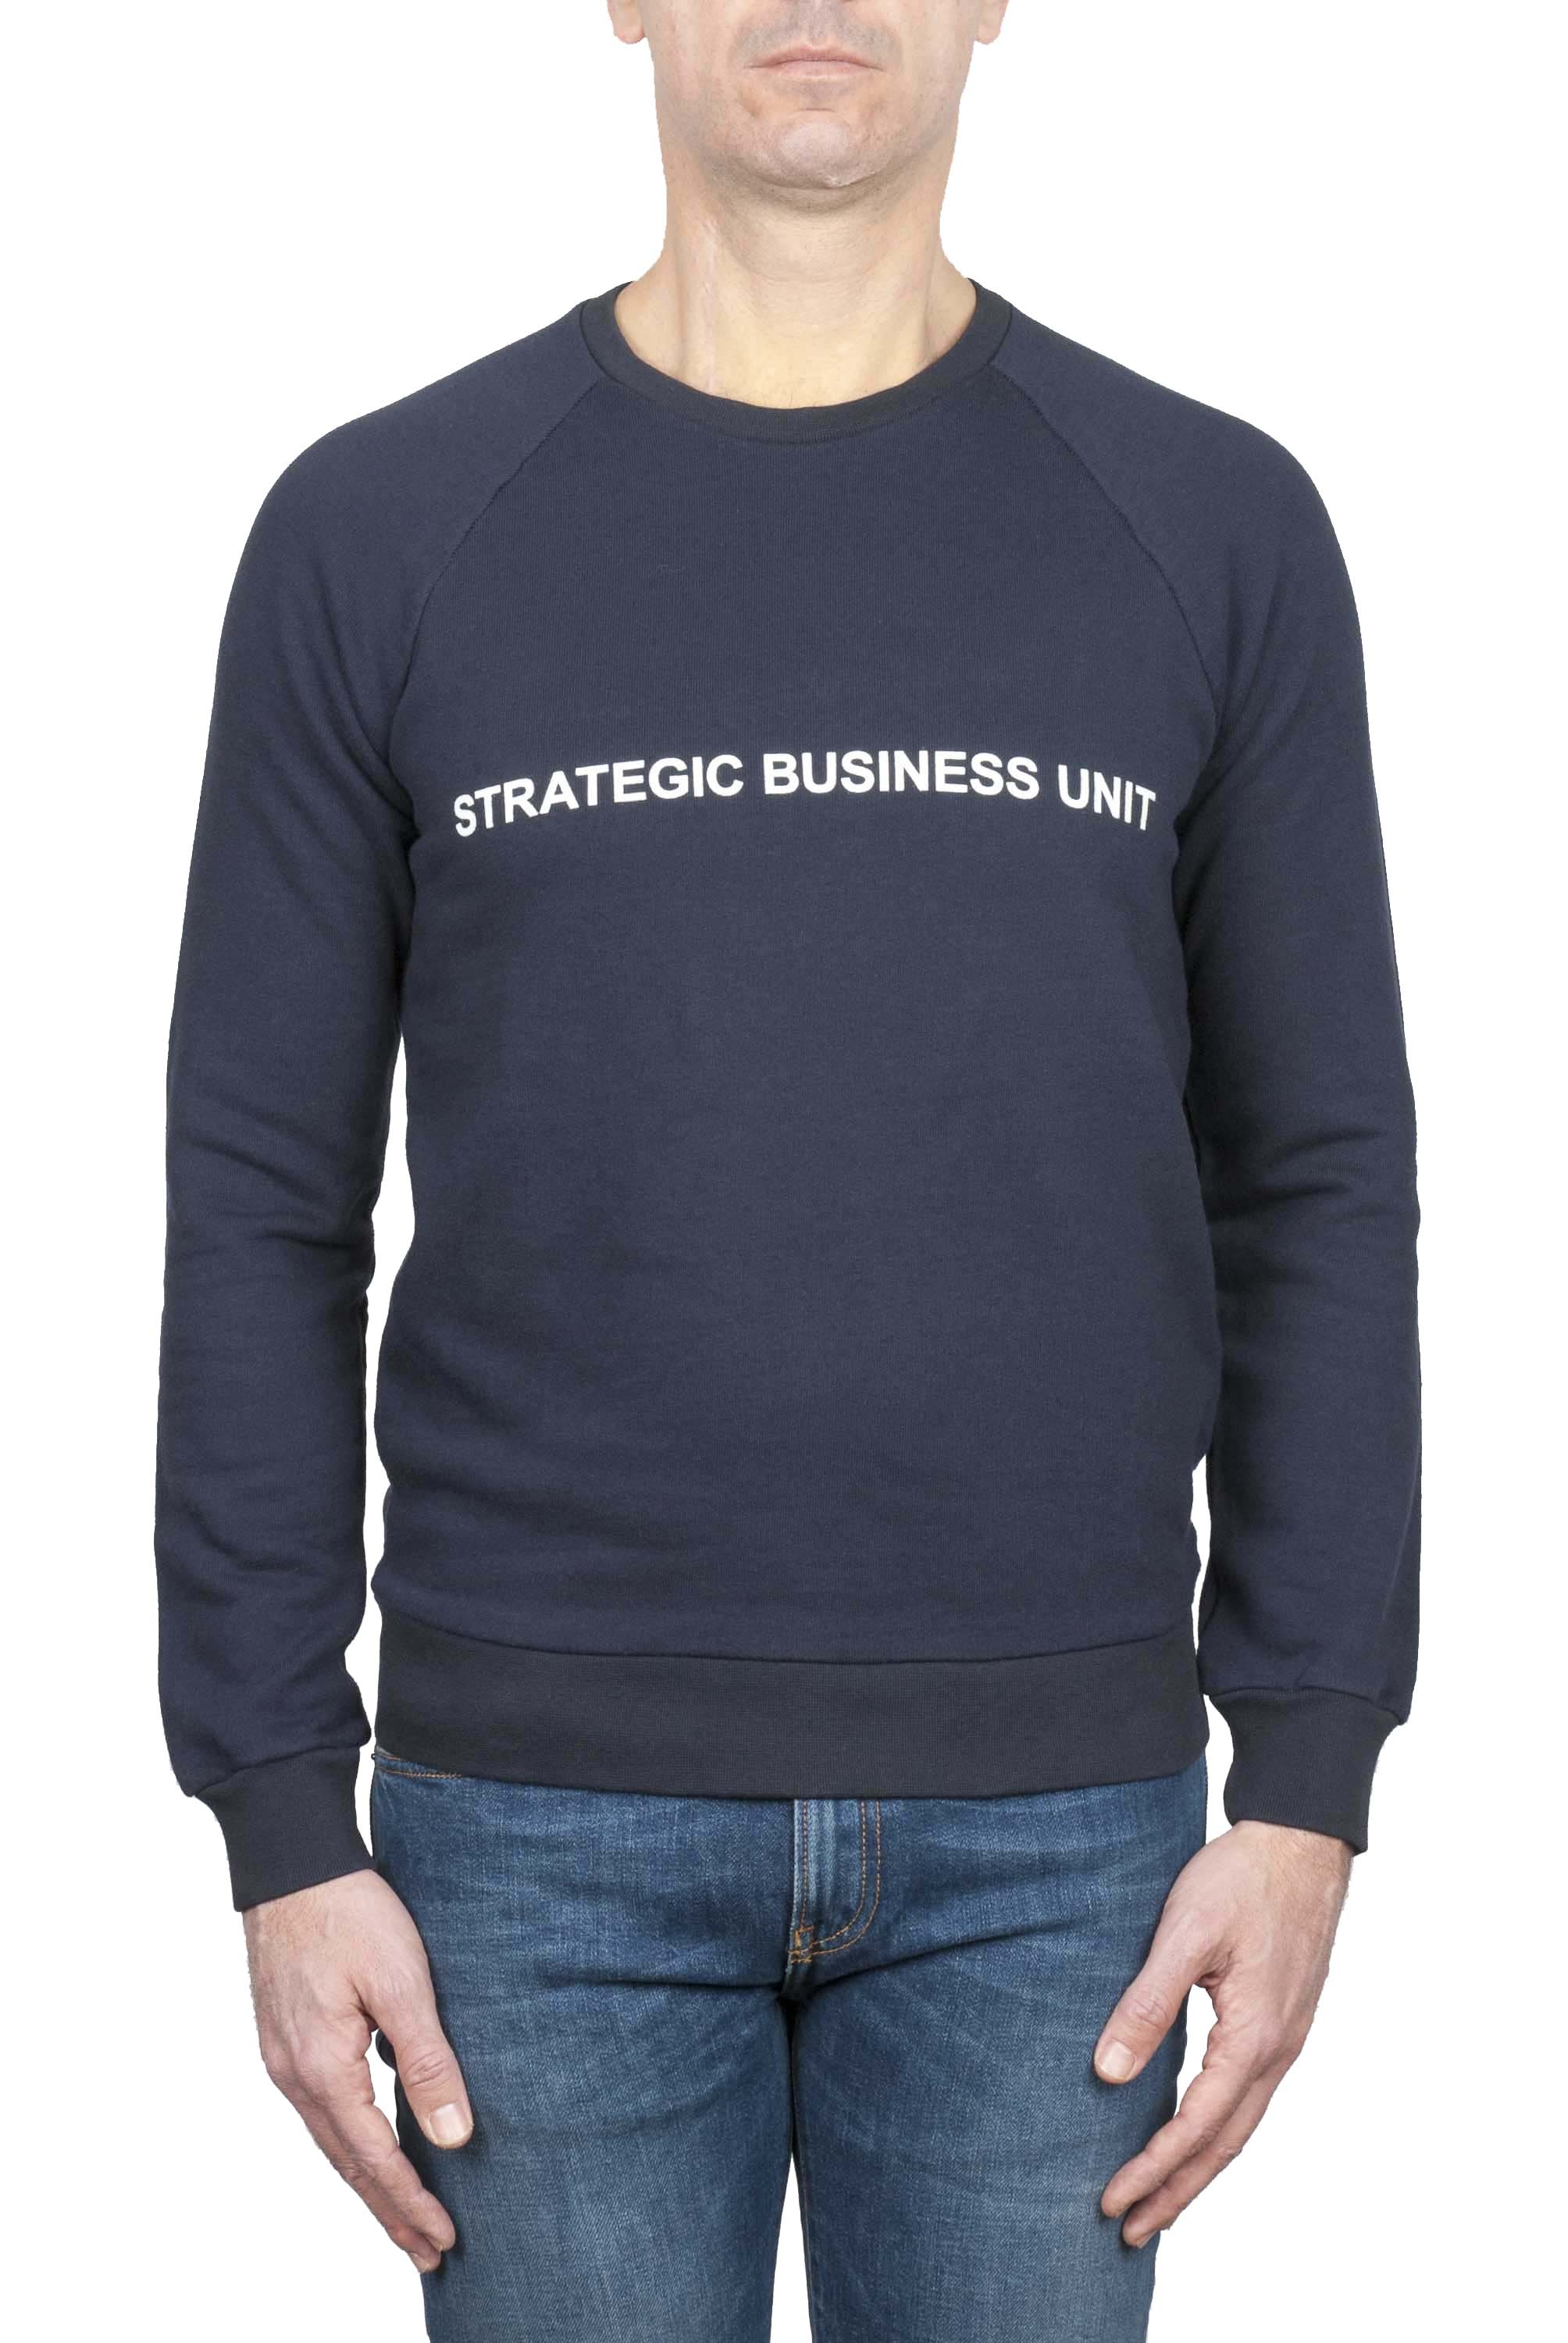 SBU 01466 Strategic Business Unit logo printed crewneck sweatshirt 01